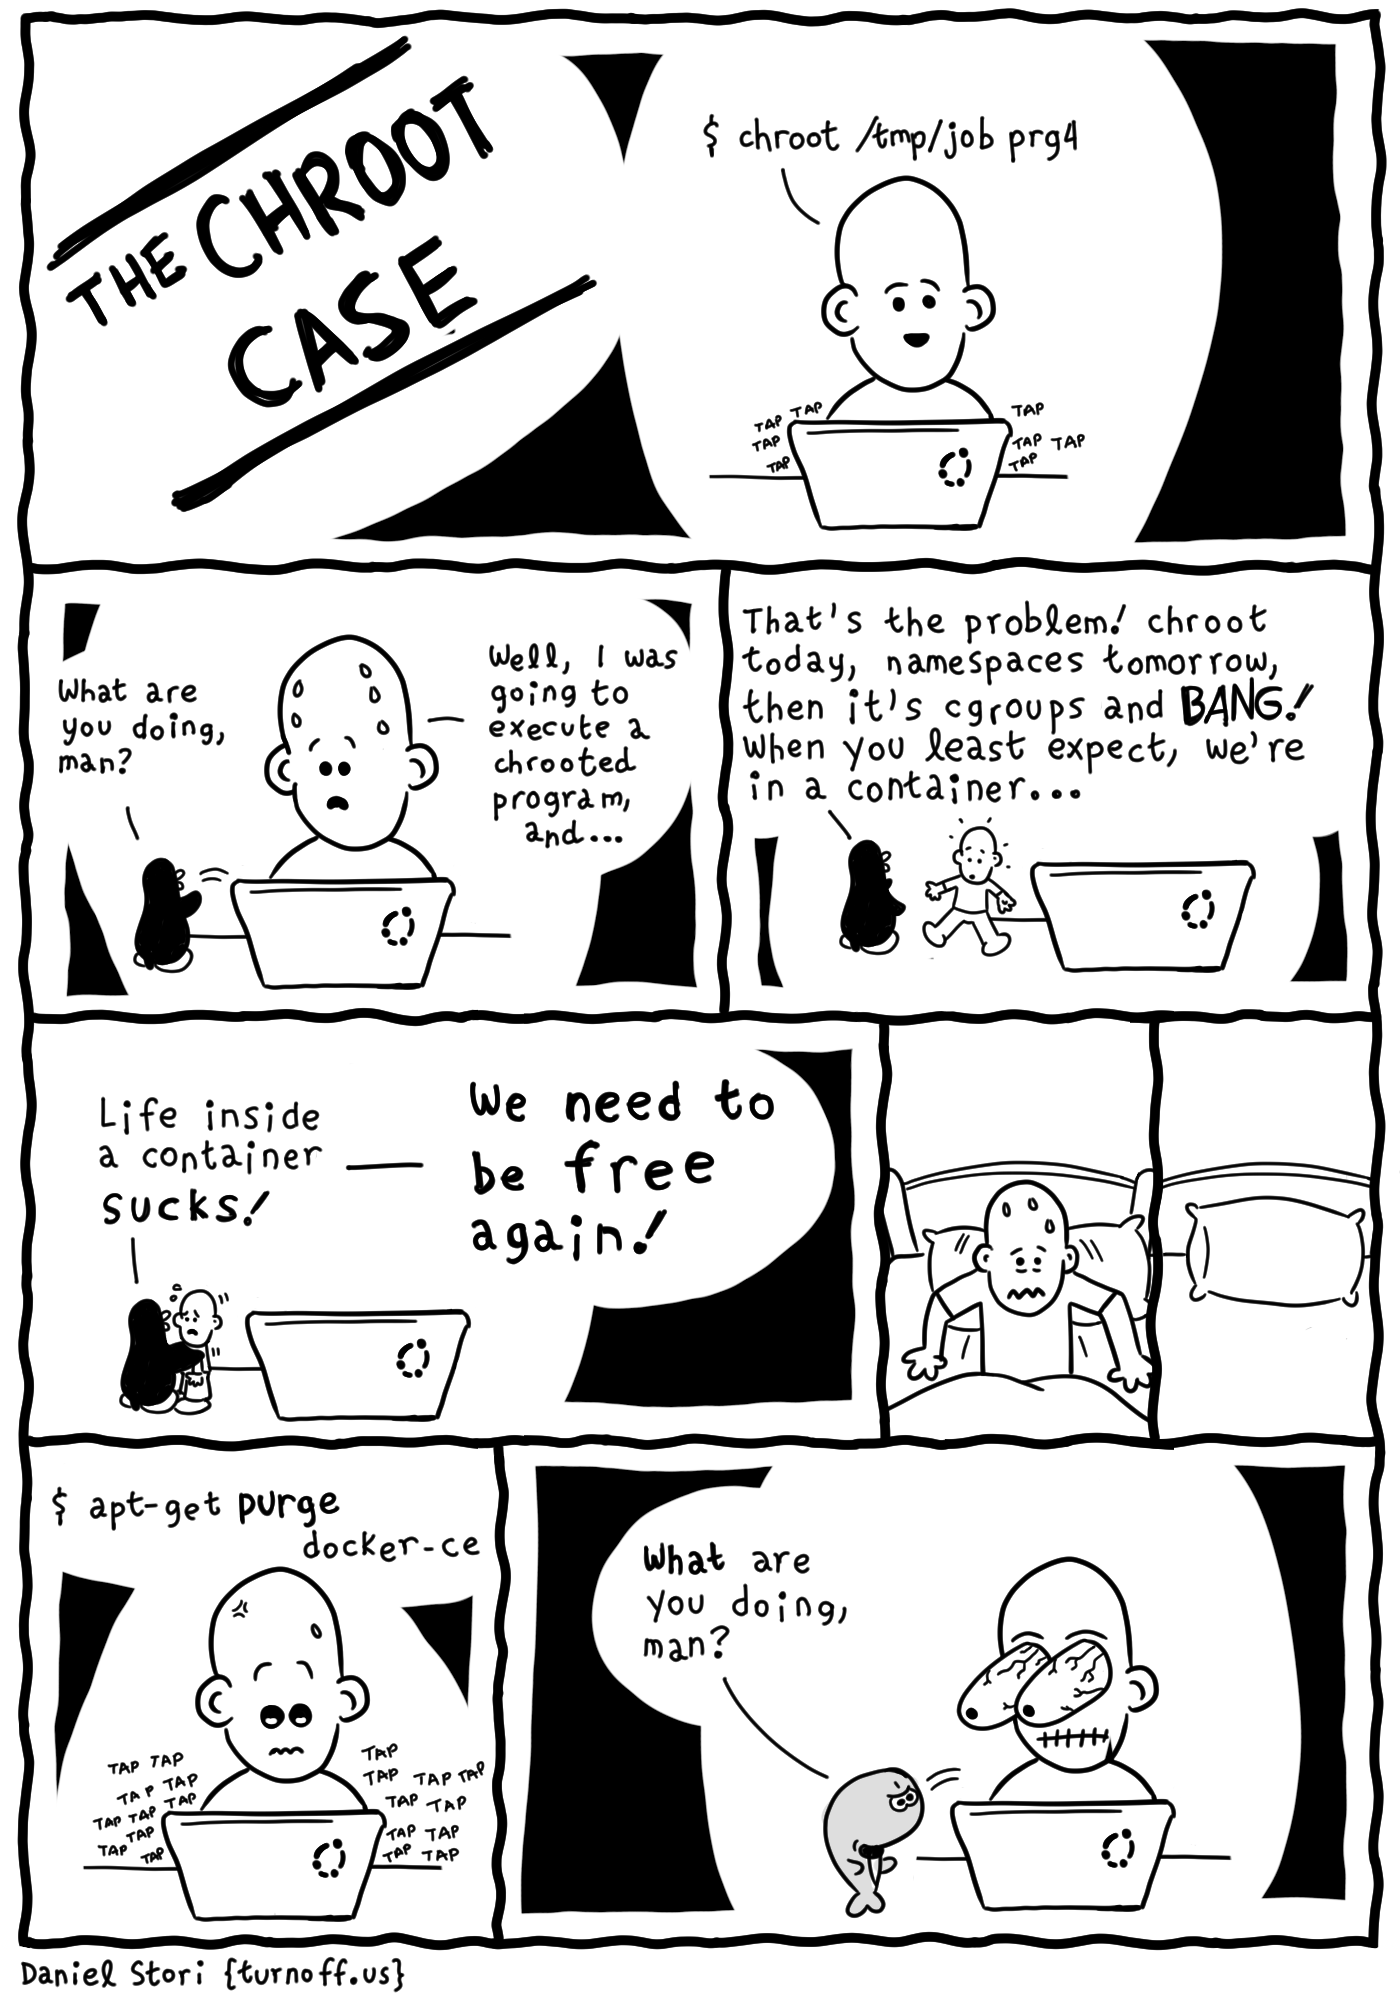 the chroot case geek comic